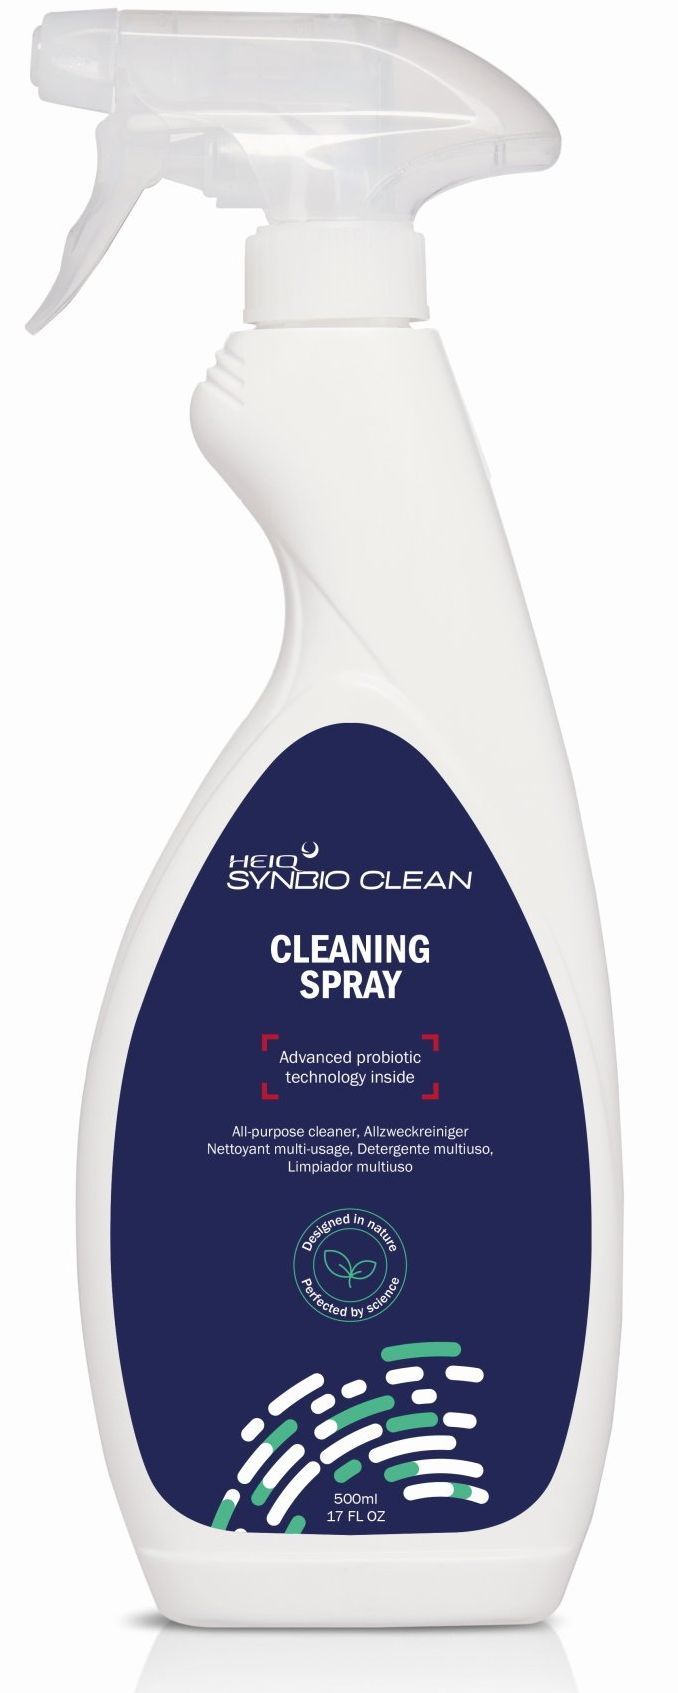 Cleaning Spray - Detergente multiuso probiotico